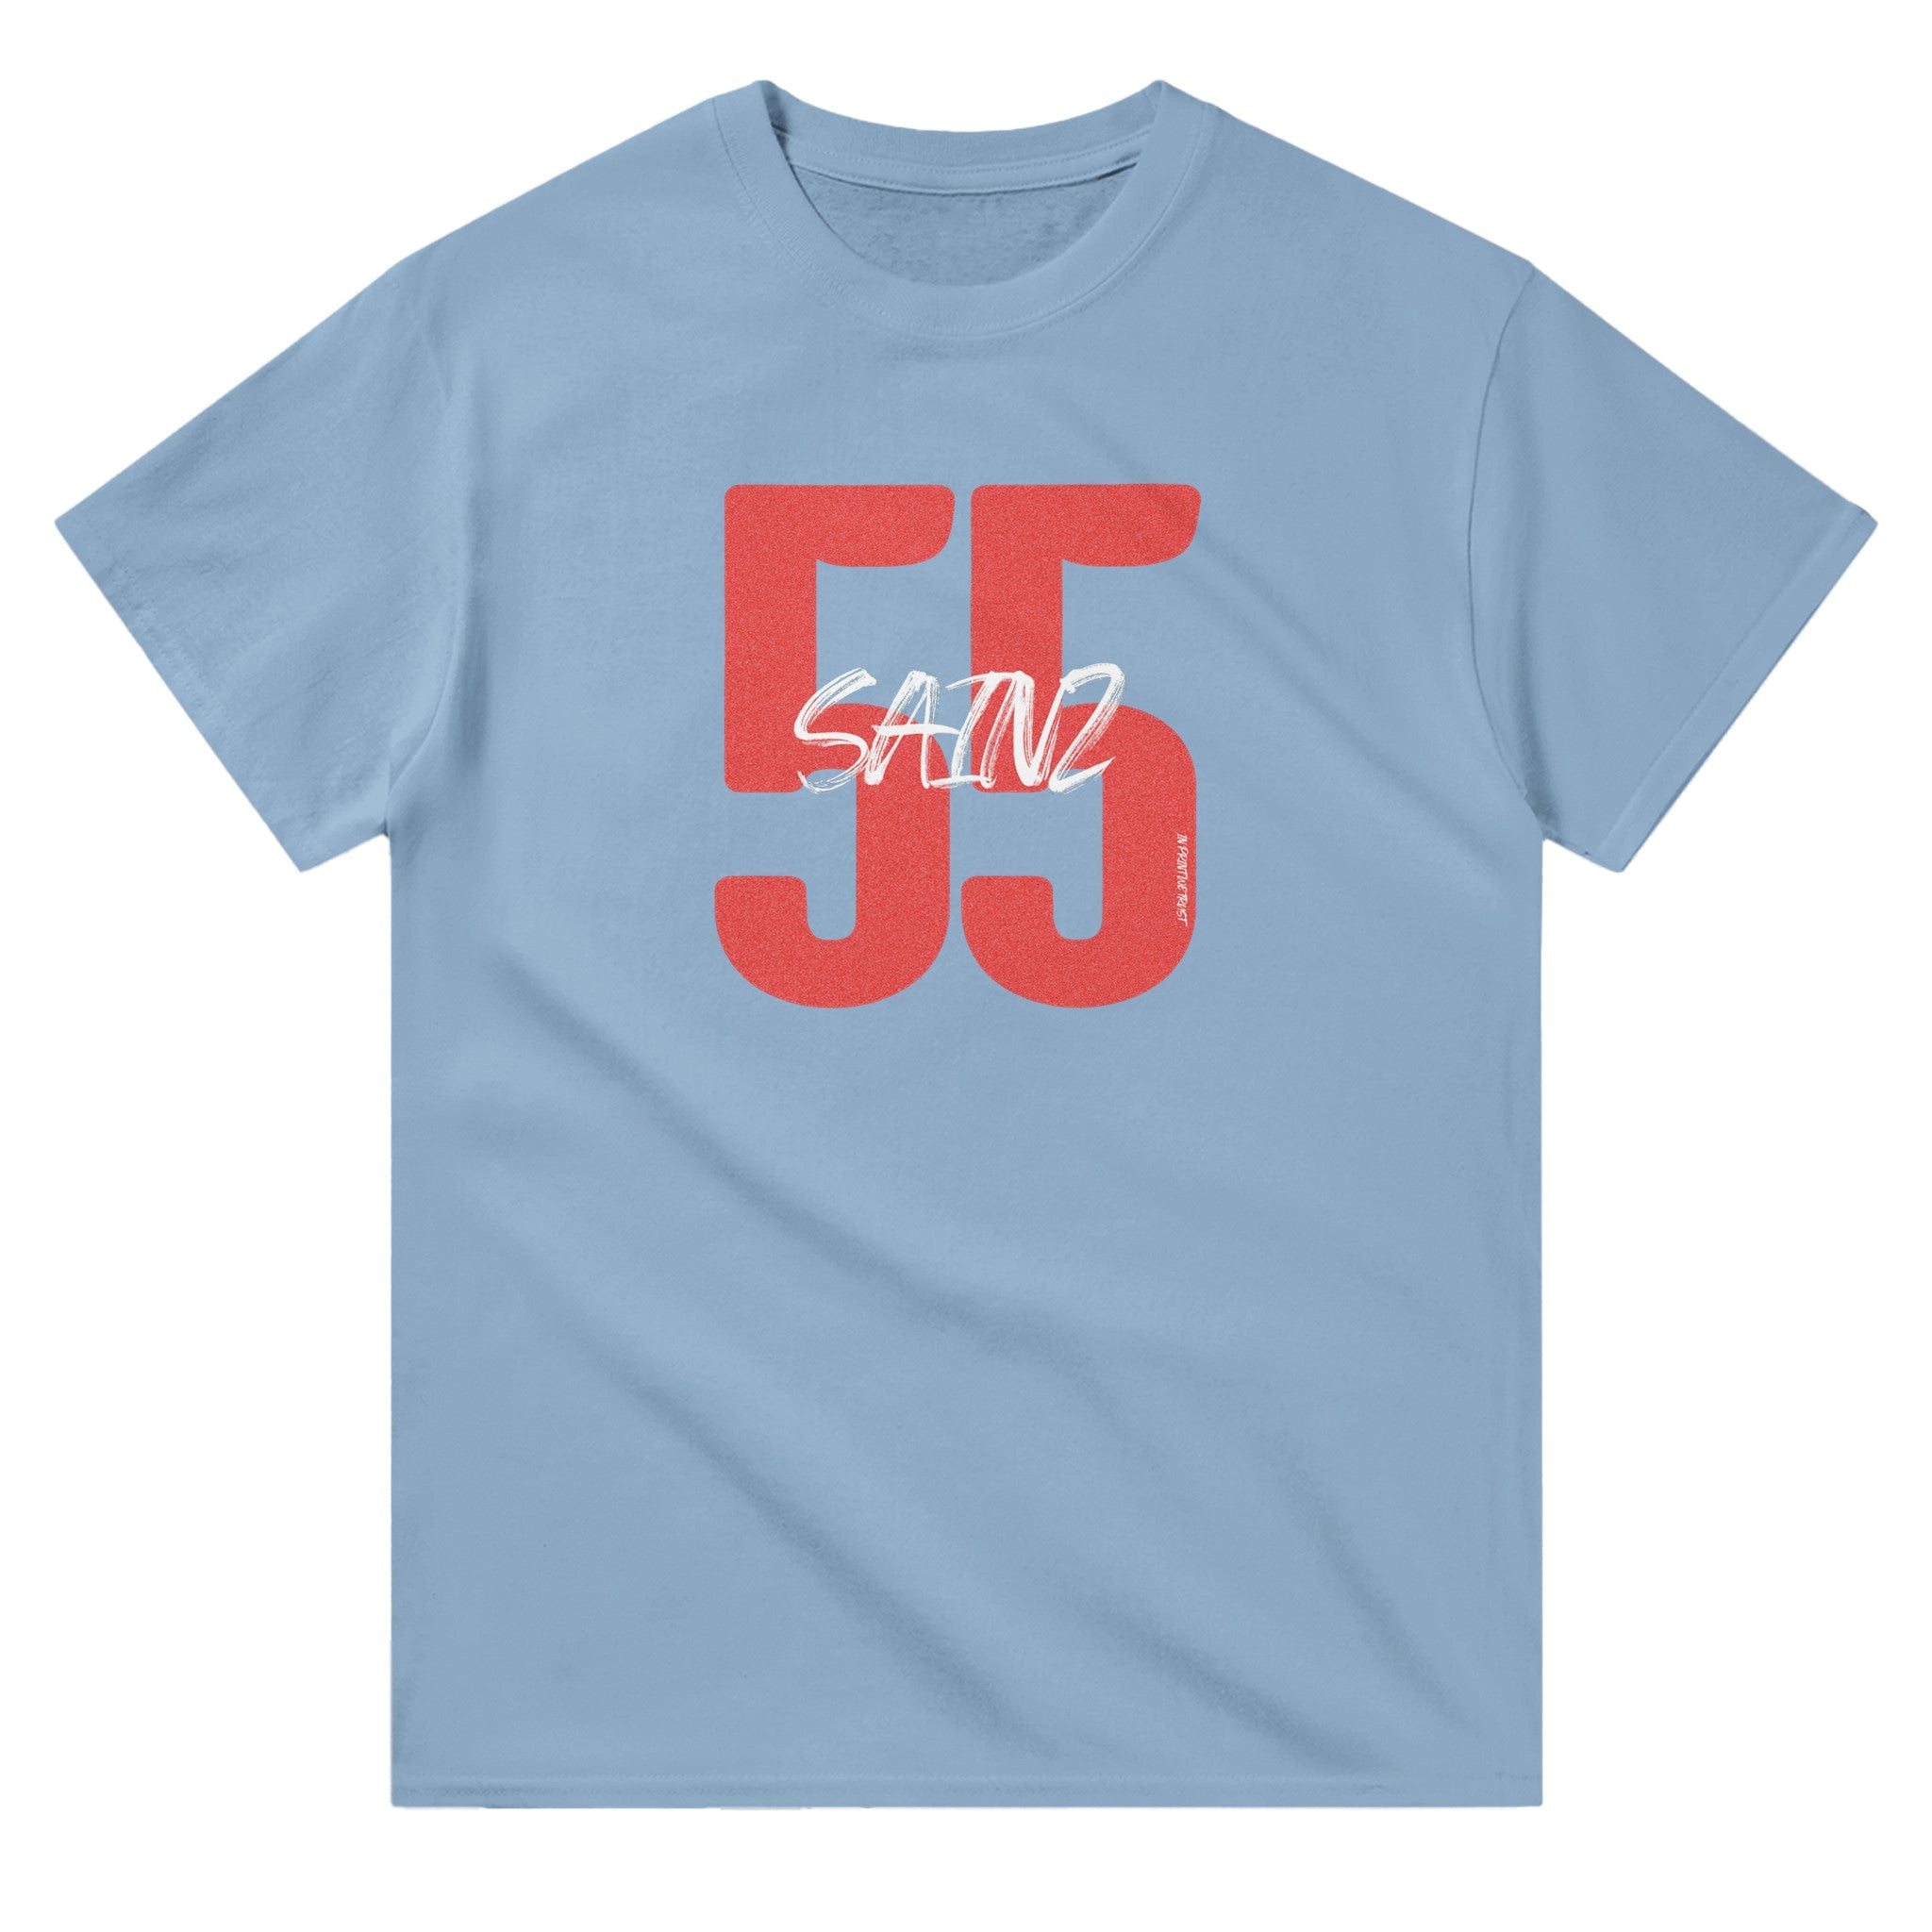 'Sainz 55' classic tee - In Print We Trust